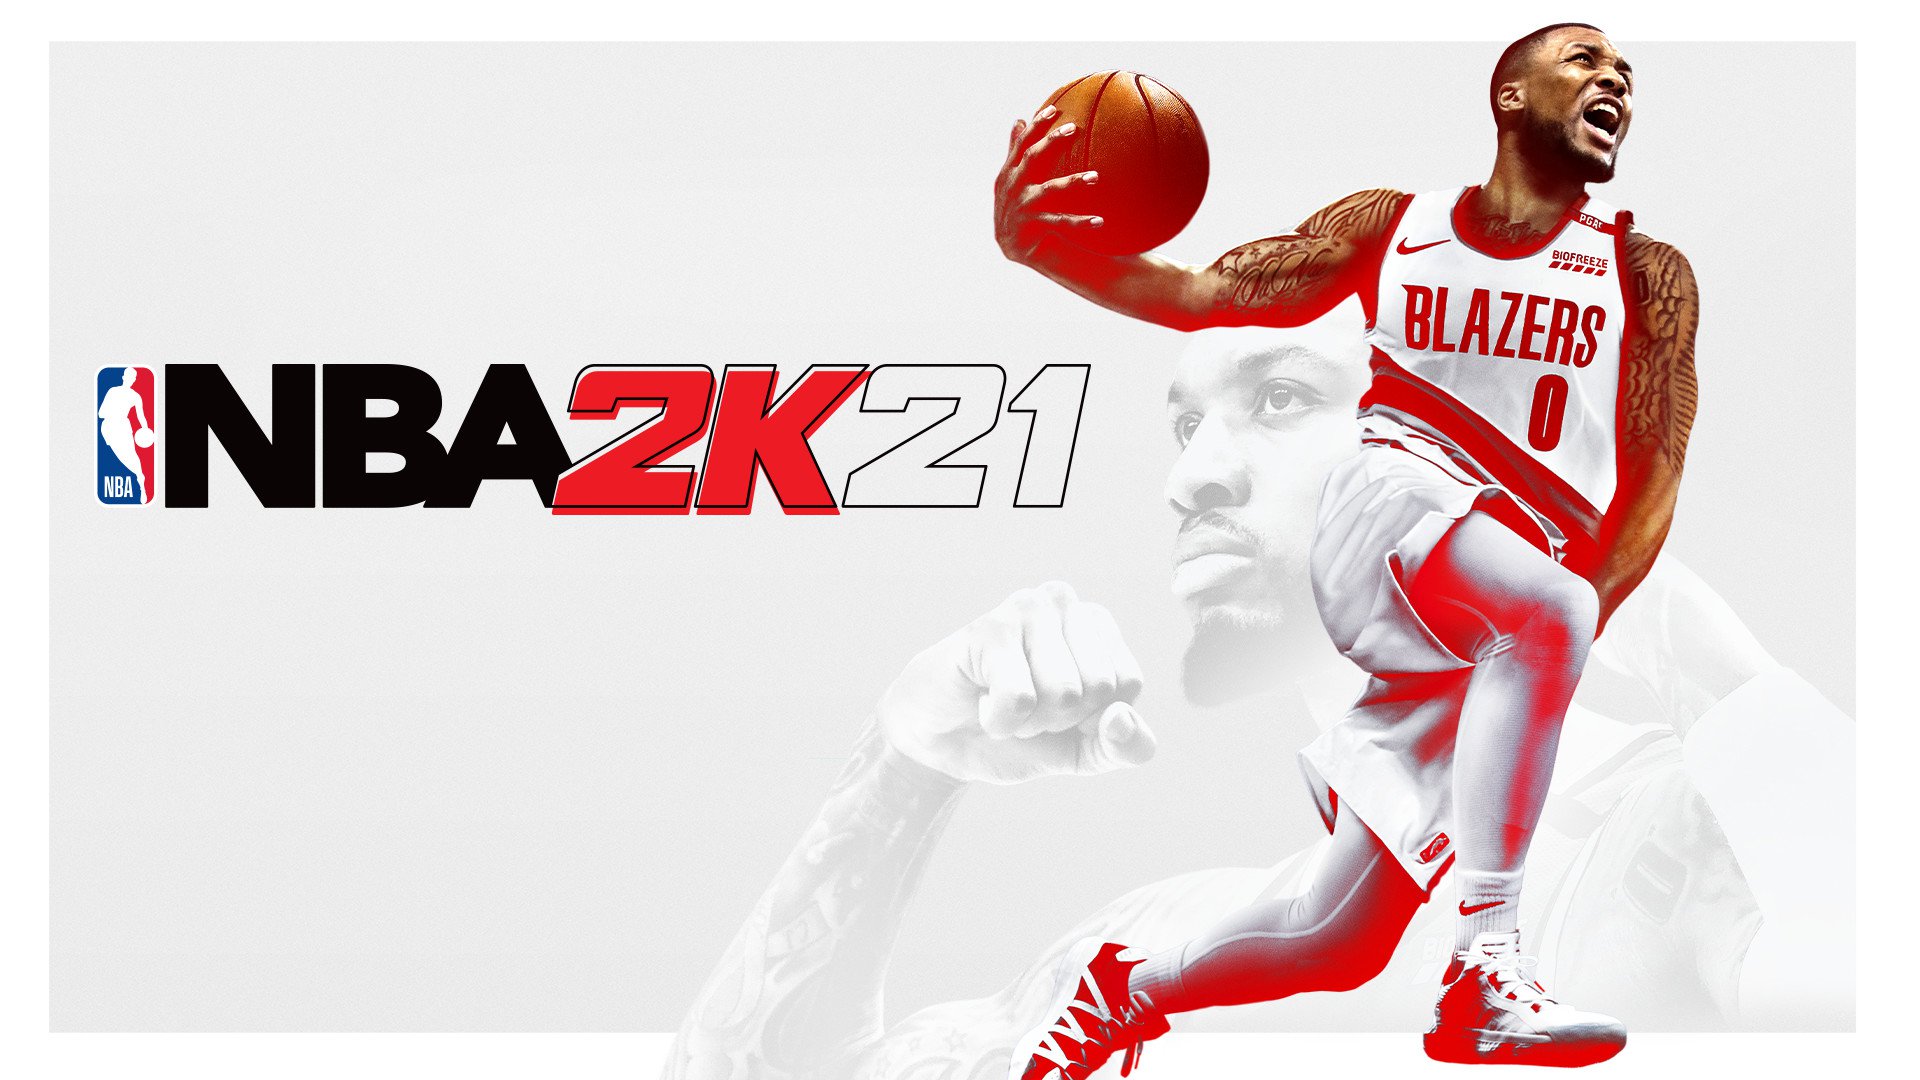 NBA 2K21[Steam]